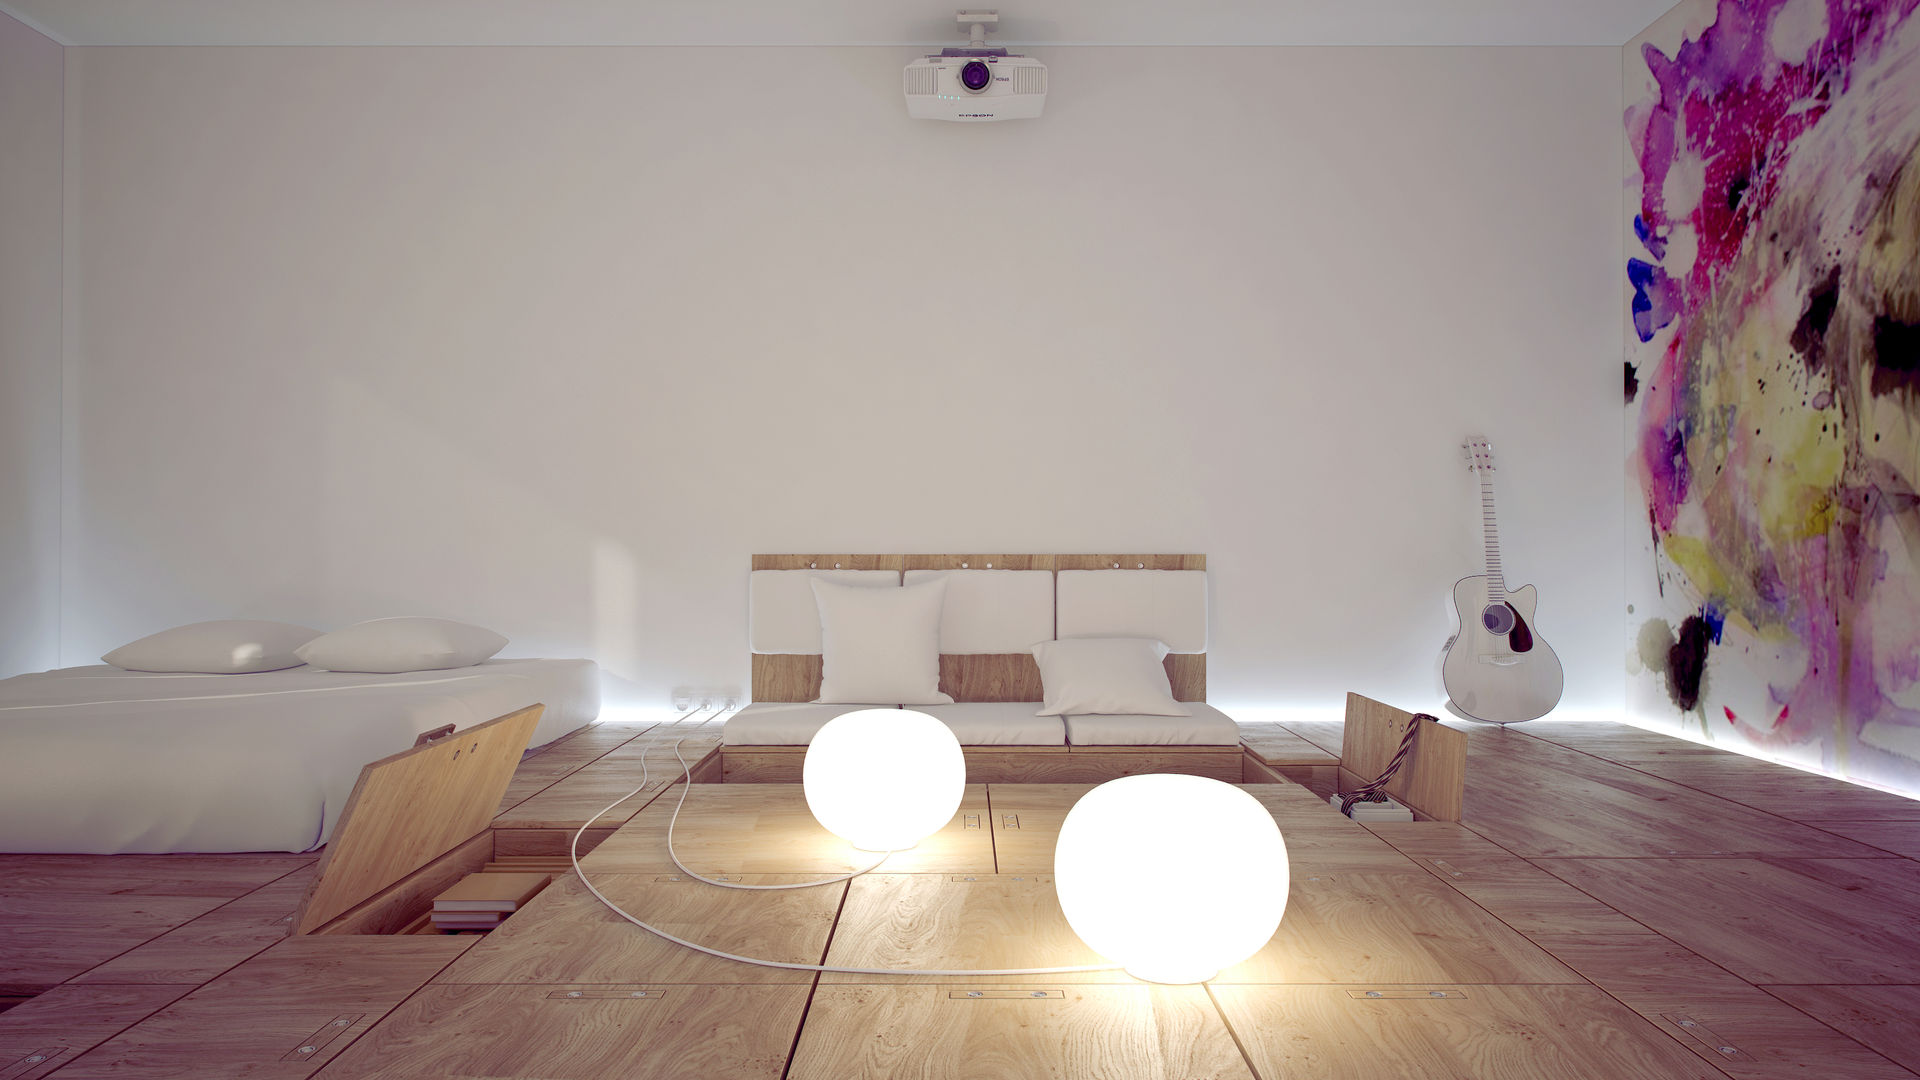 интерьер TRANSFIGURATOR, YOUR PROJECT YOUR PROJECT Minimalist living room